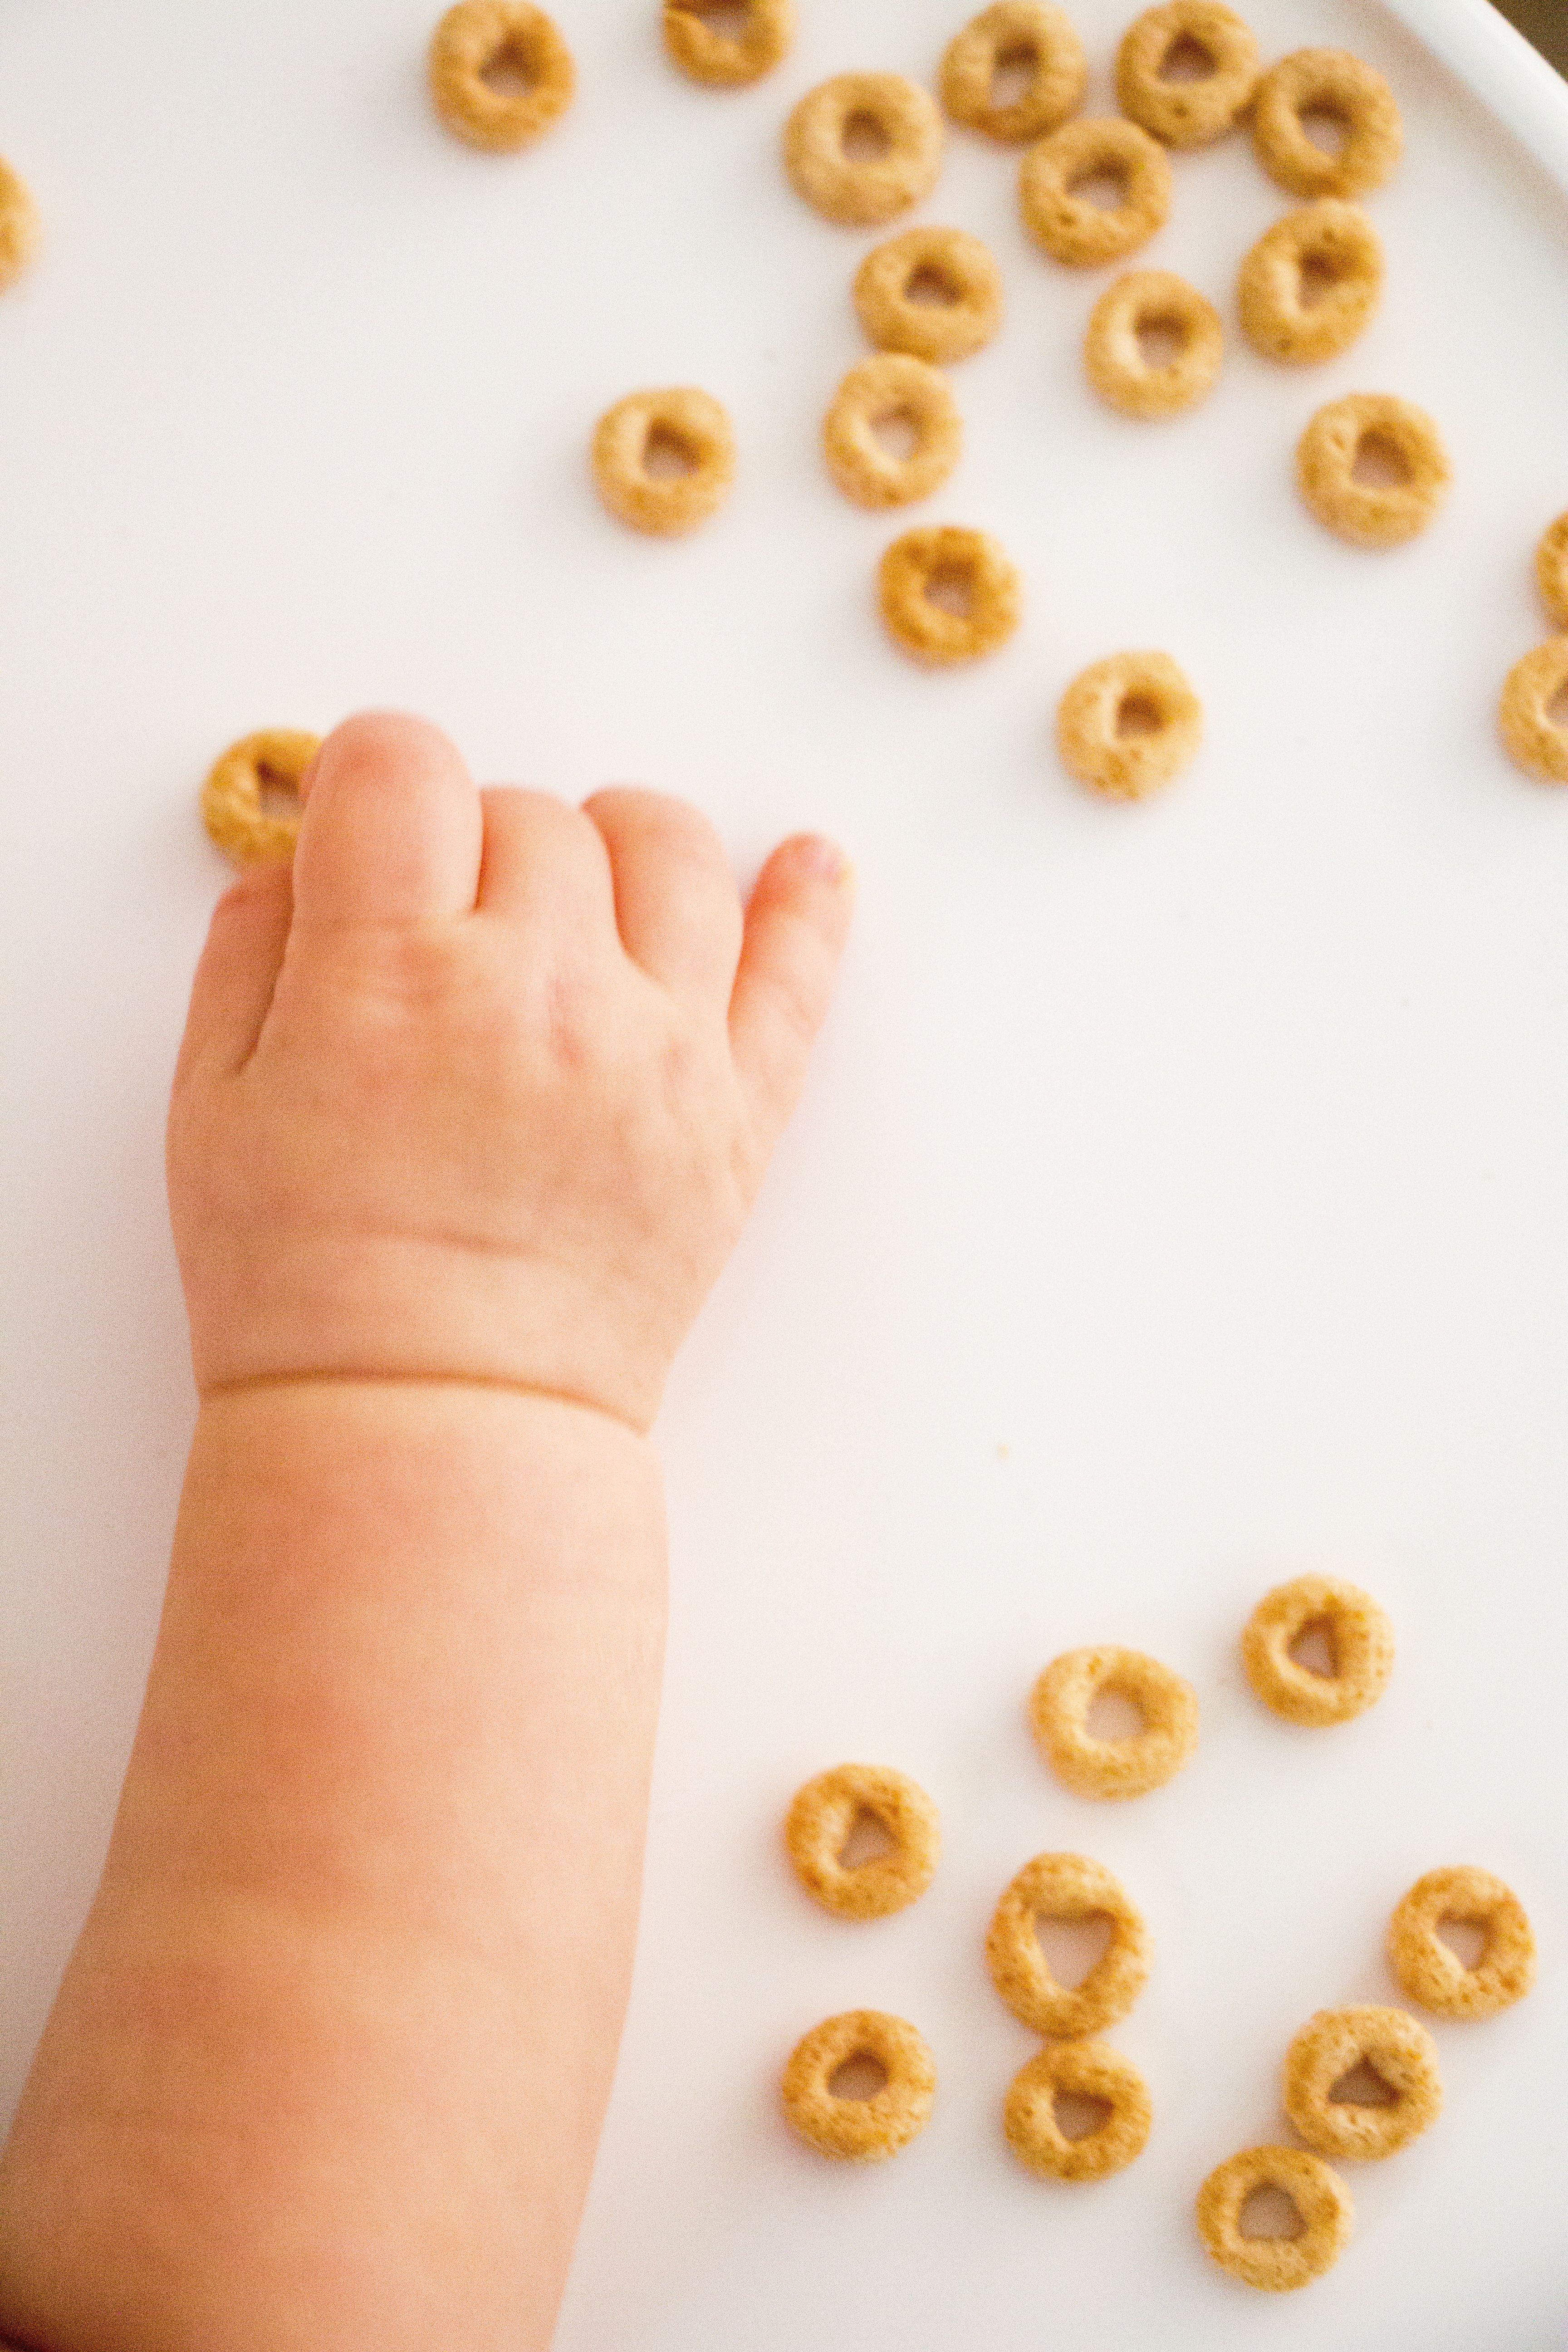 Baby grabbing cereal.